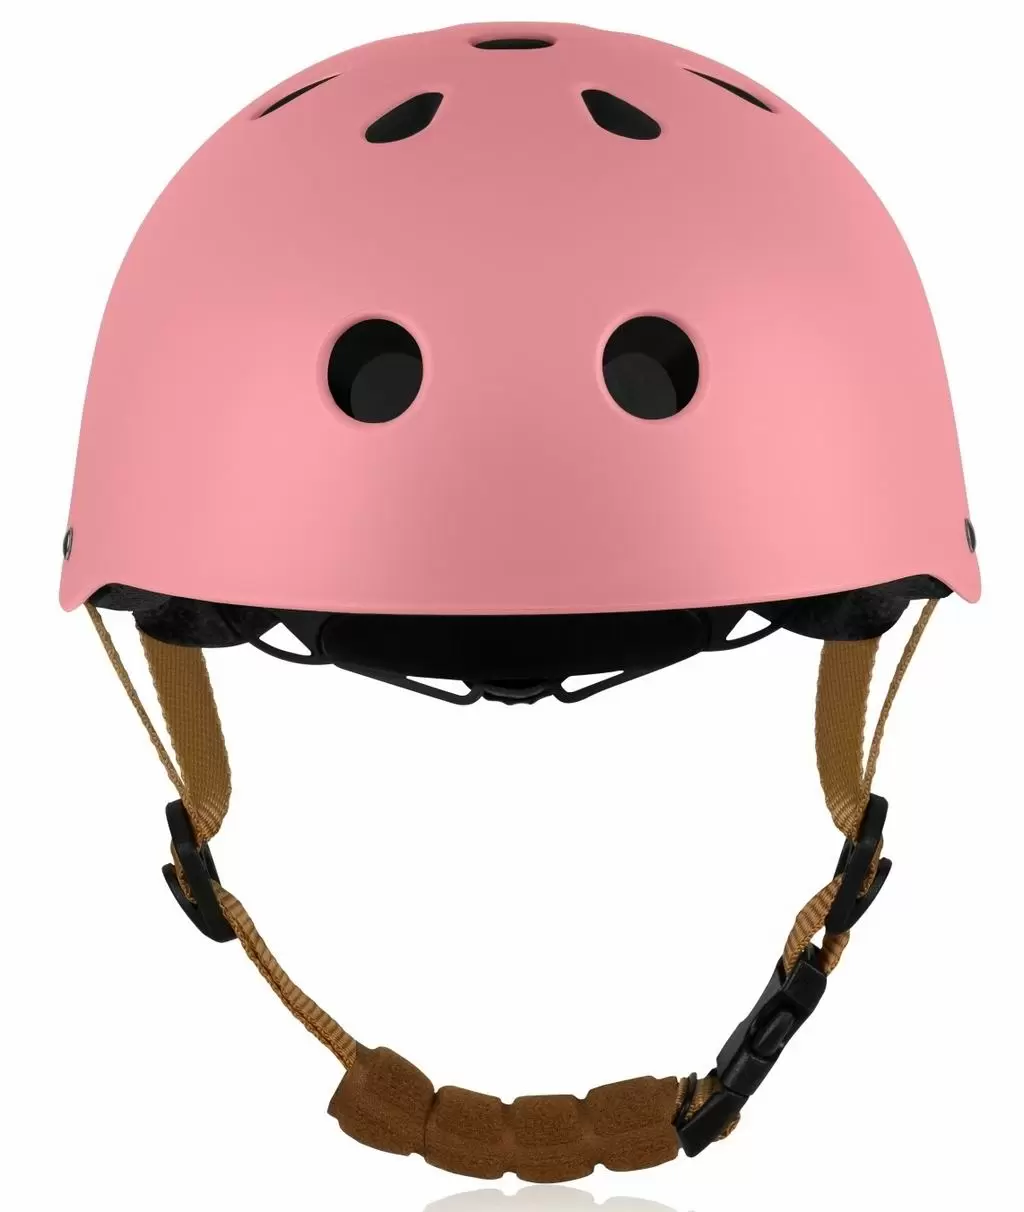 Детский шлем Lionelo Helmet, розовый